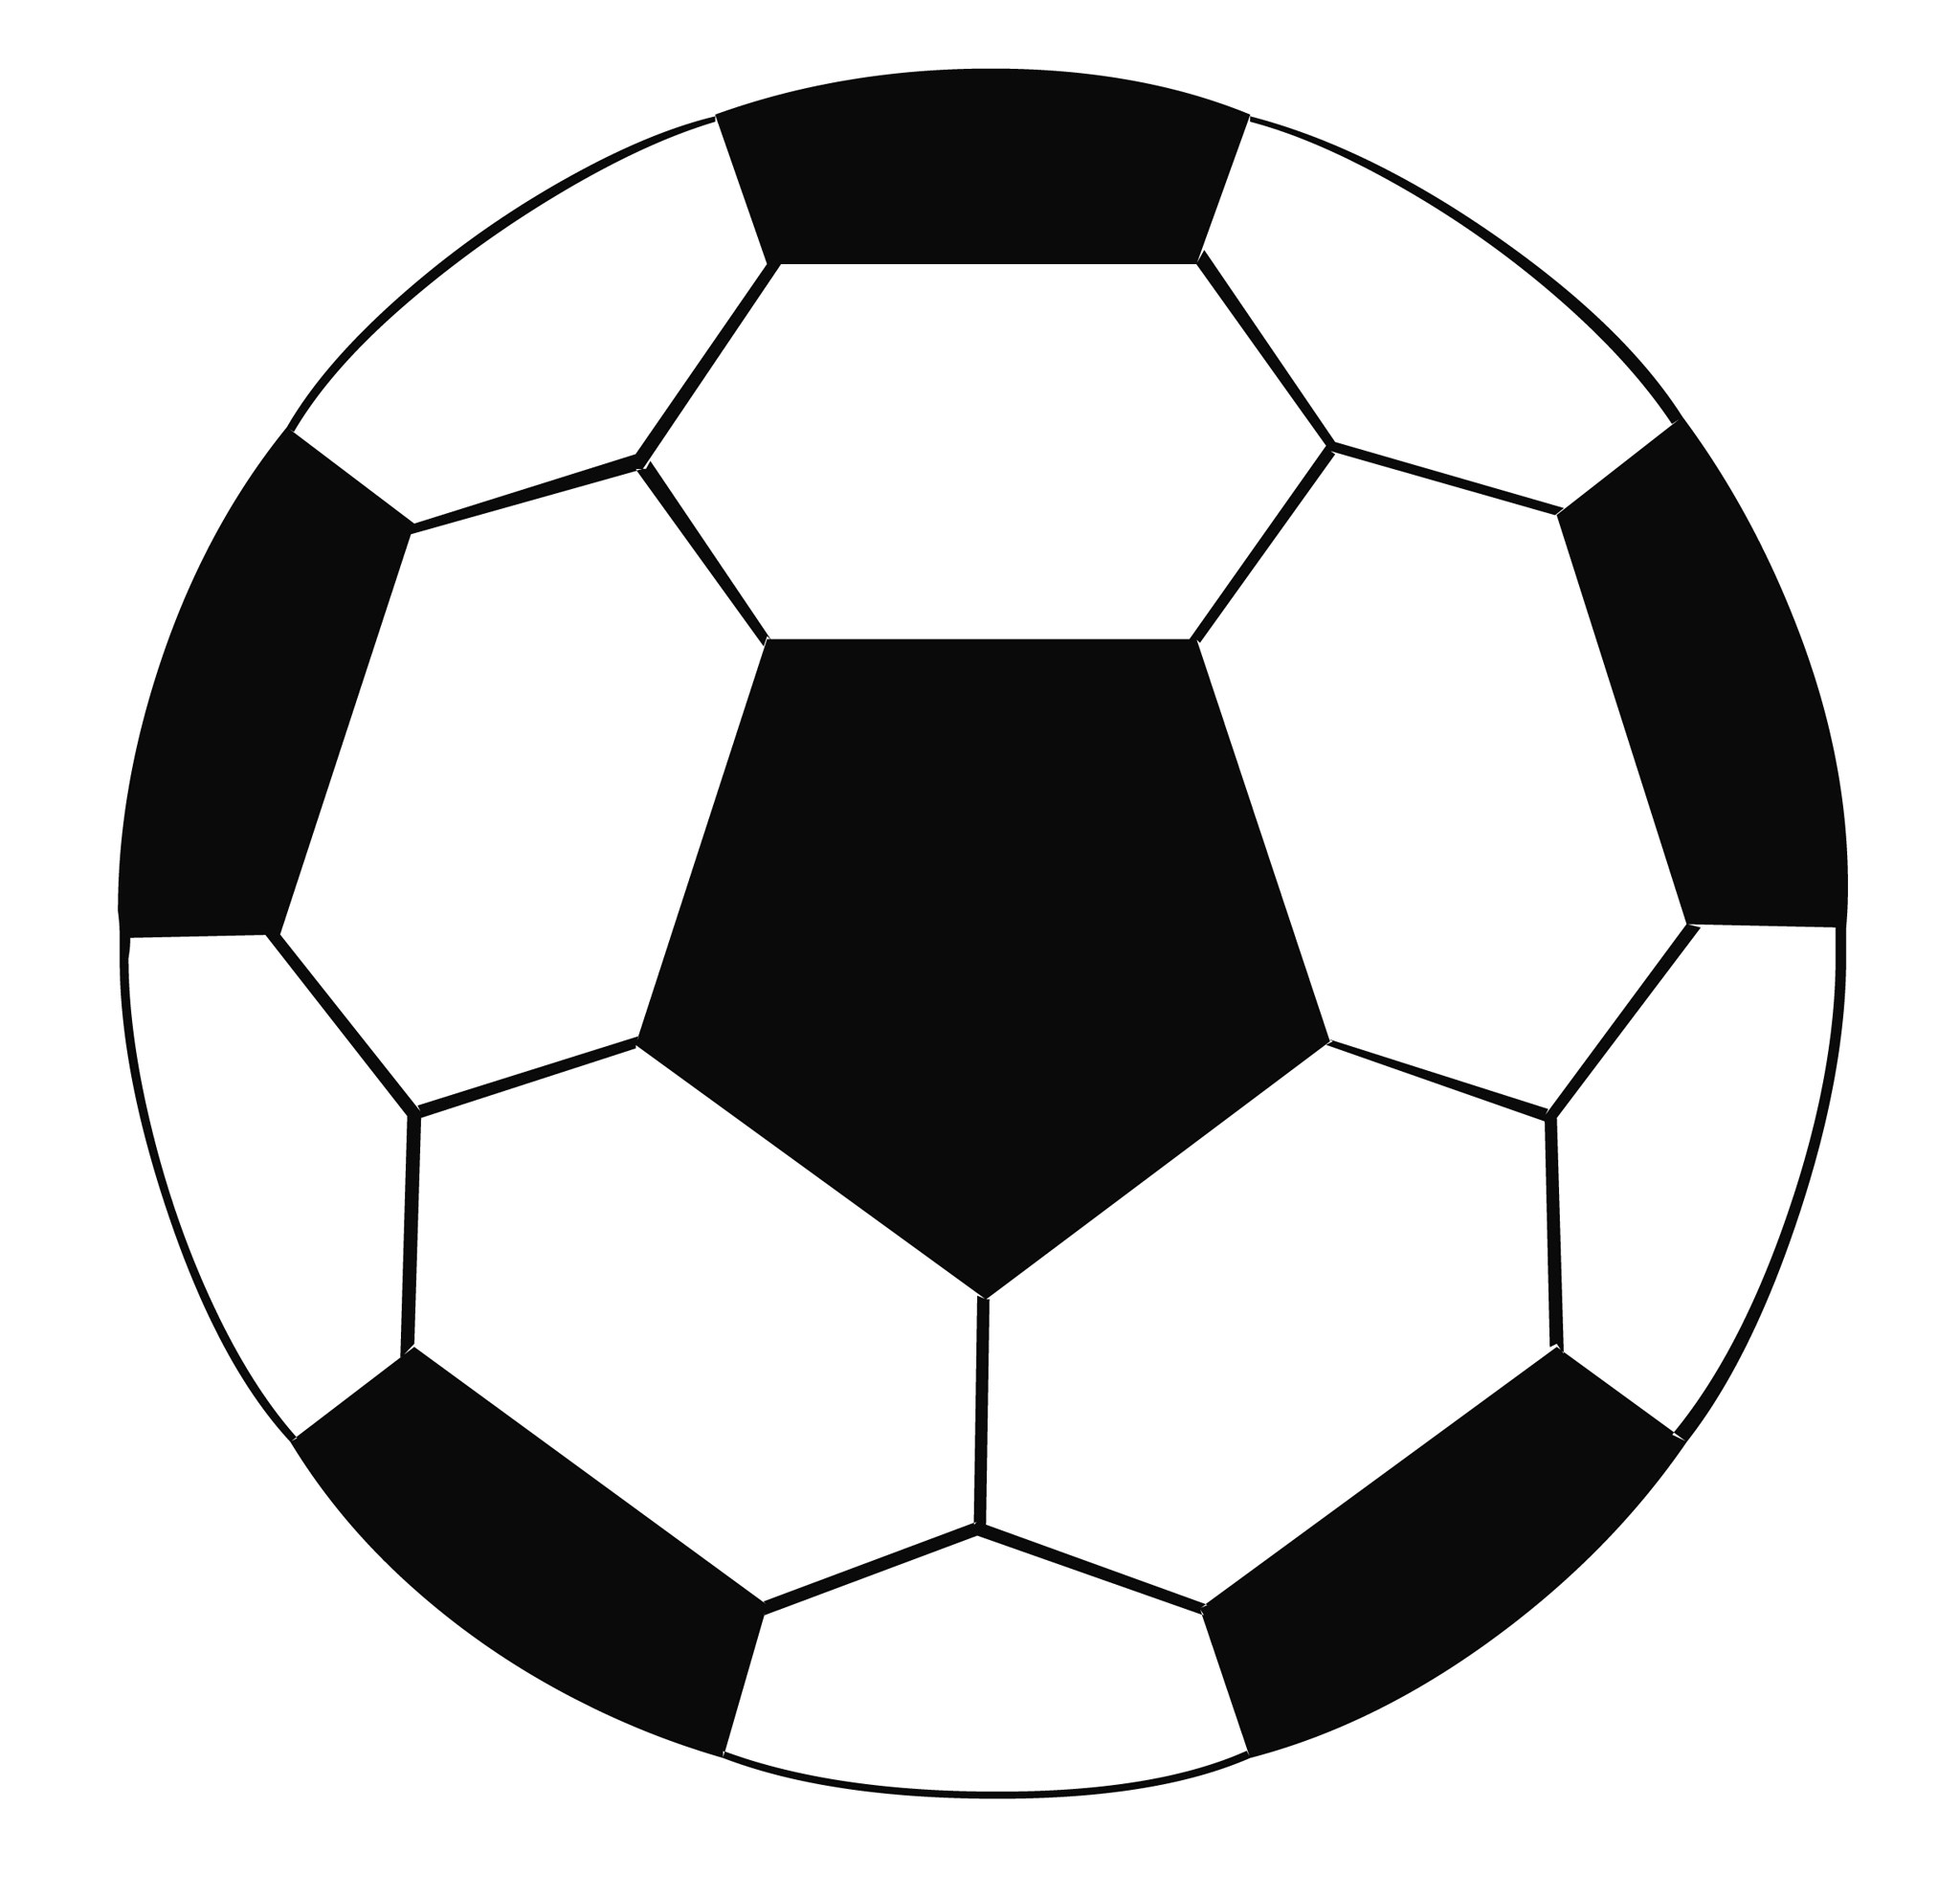 art soccer ball; Free .